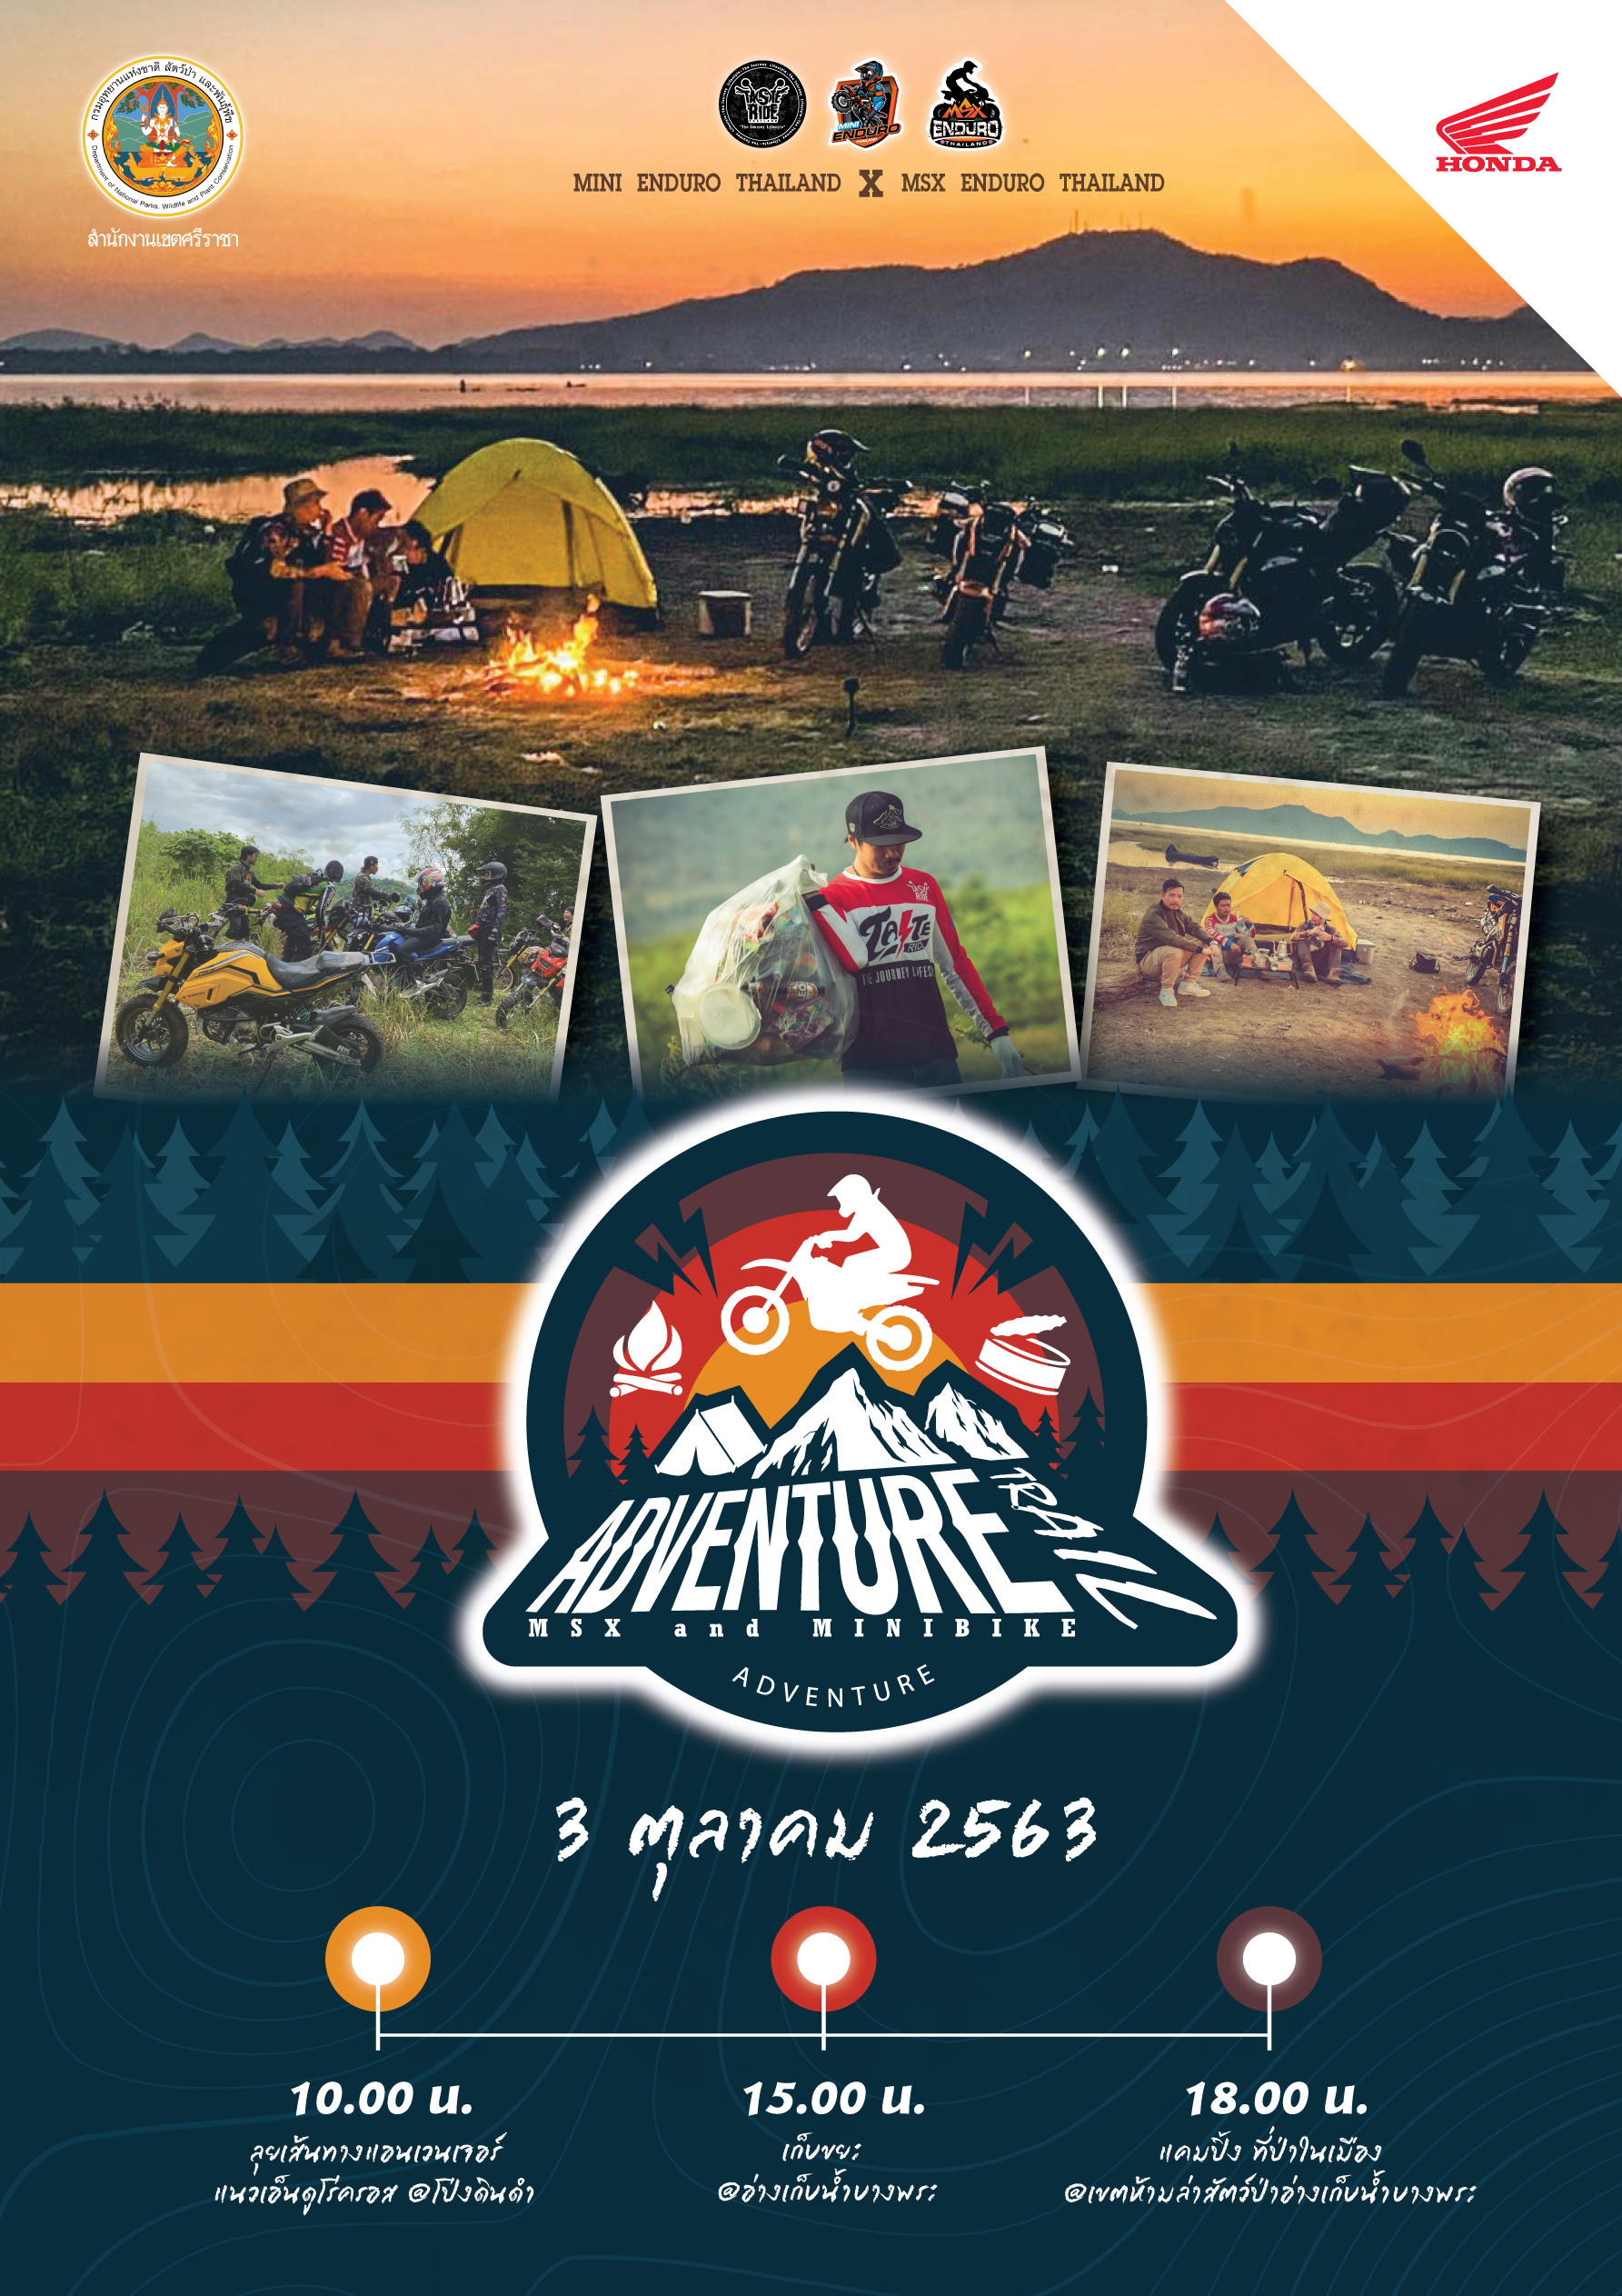 Msx & Minibike Adventure Trails 2020